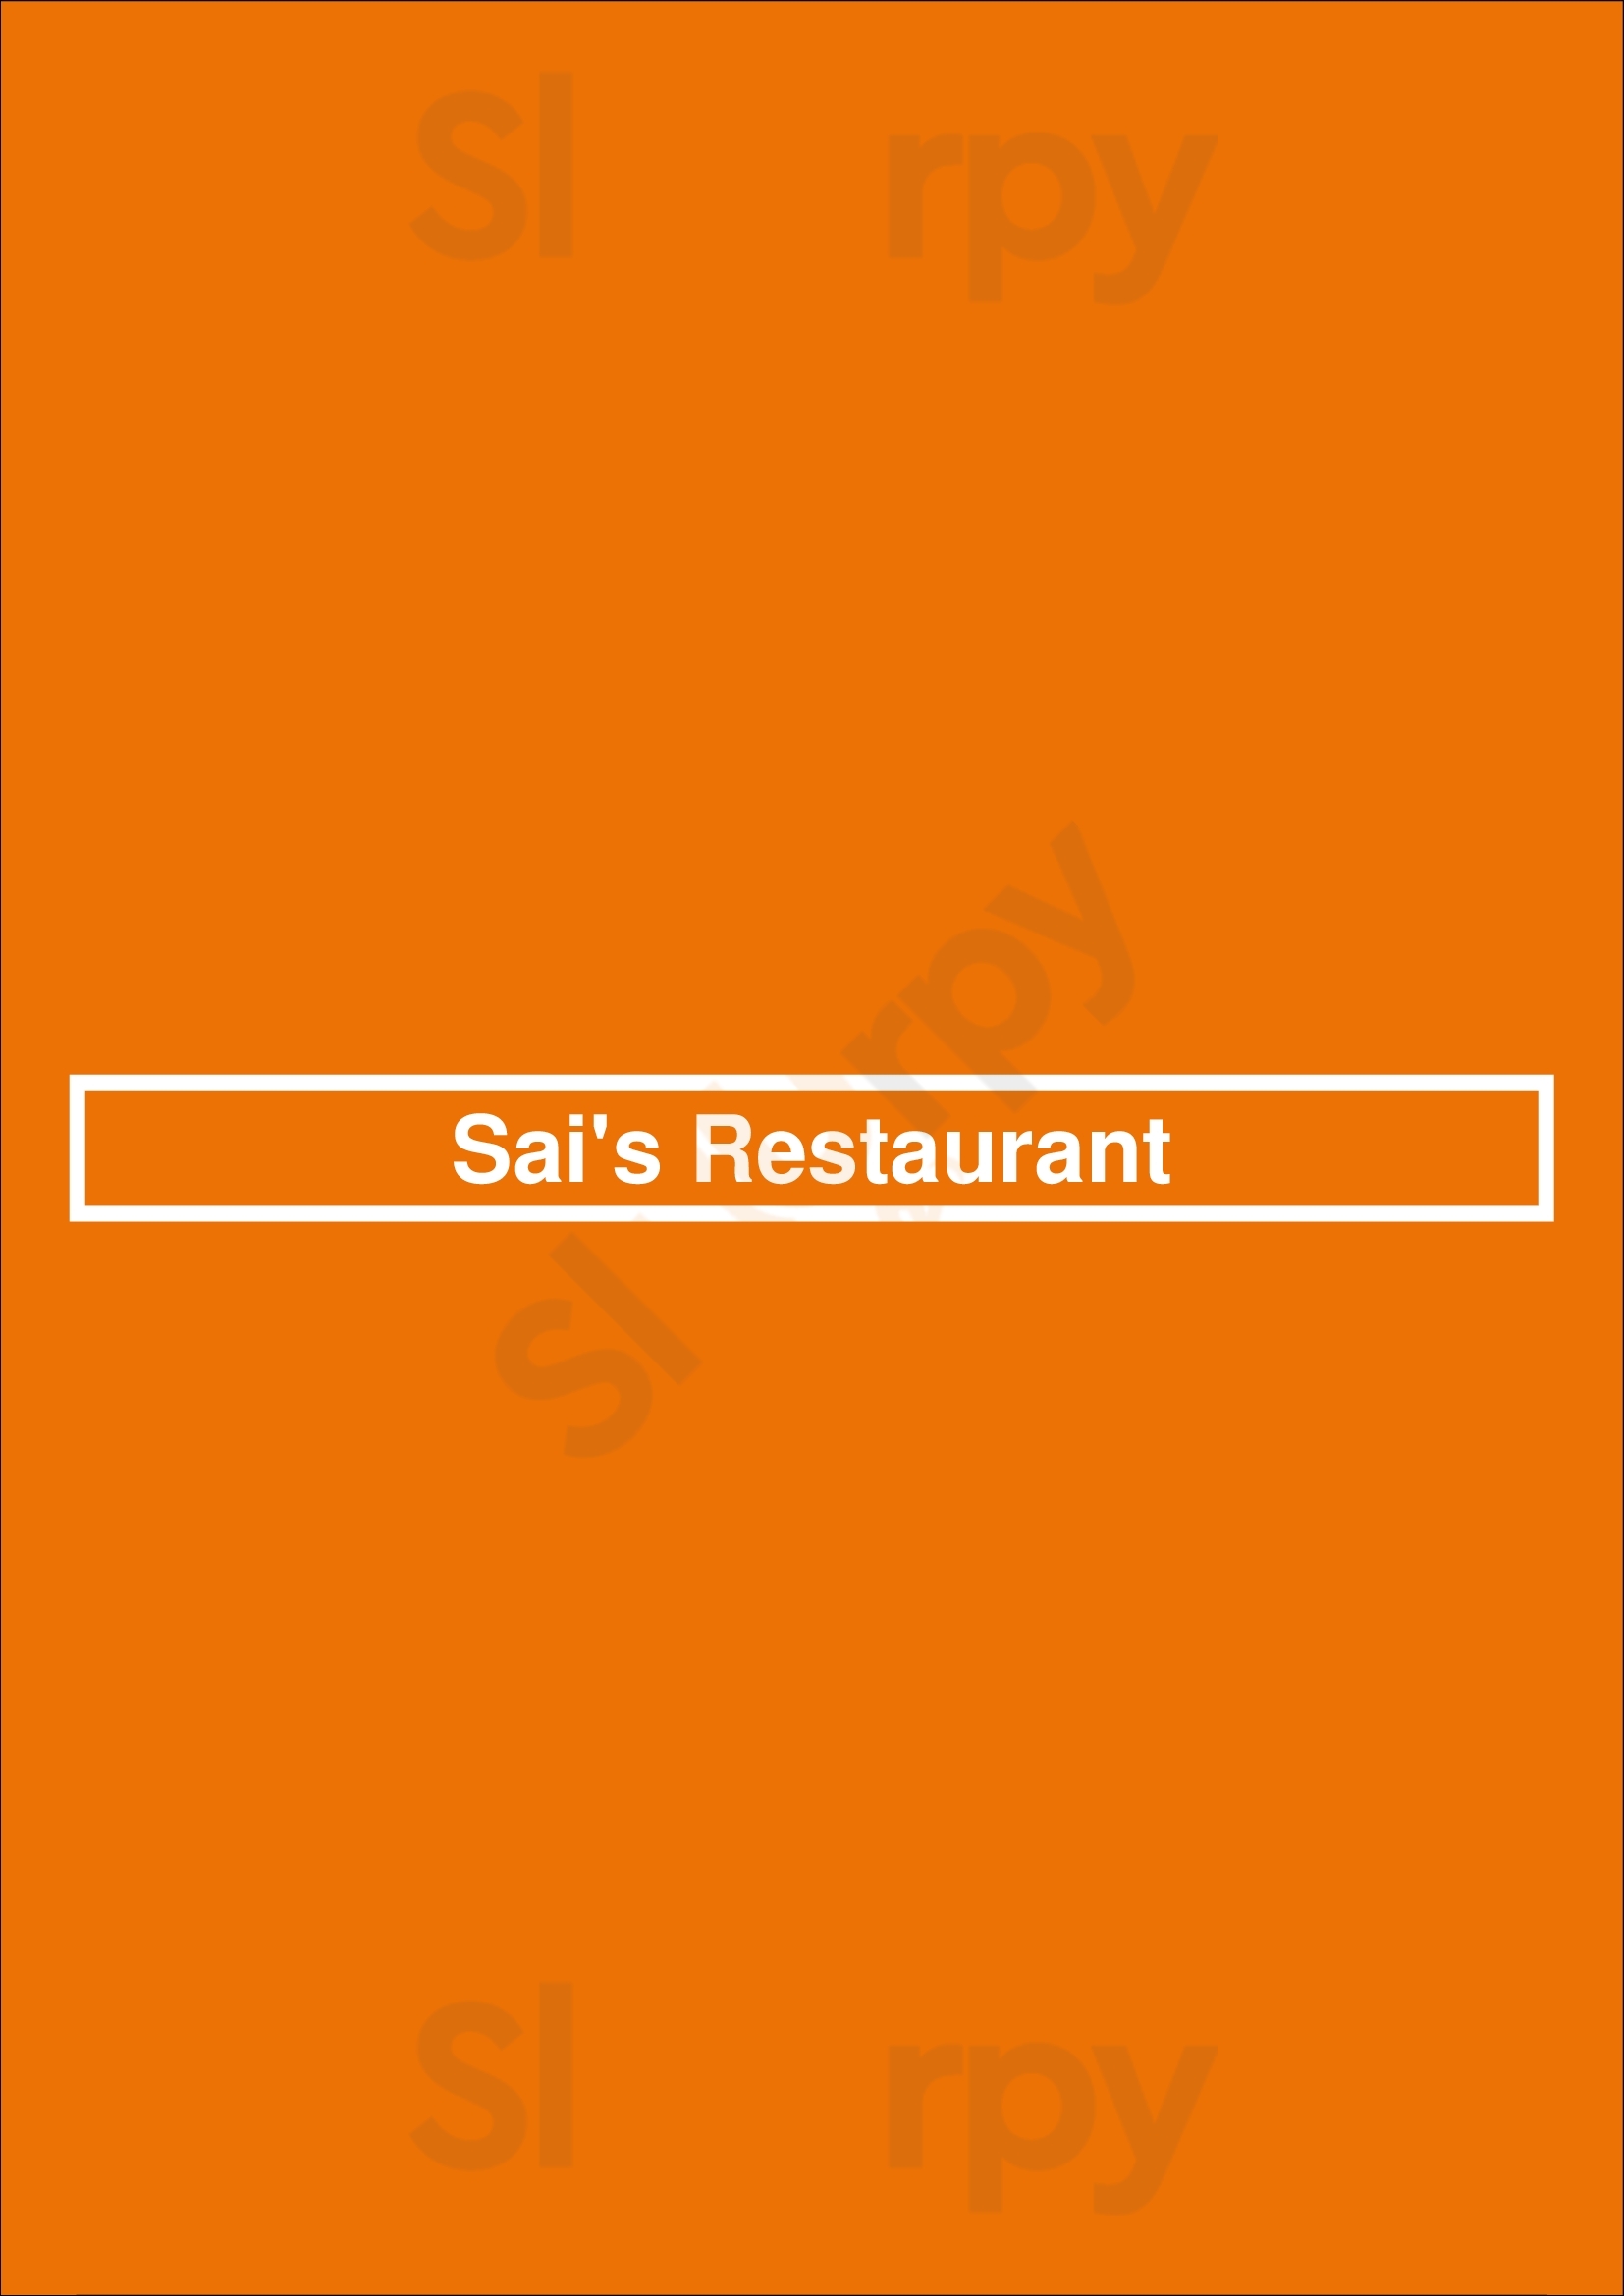 Sai's Restaurant San Francisco Menu - 1